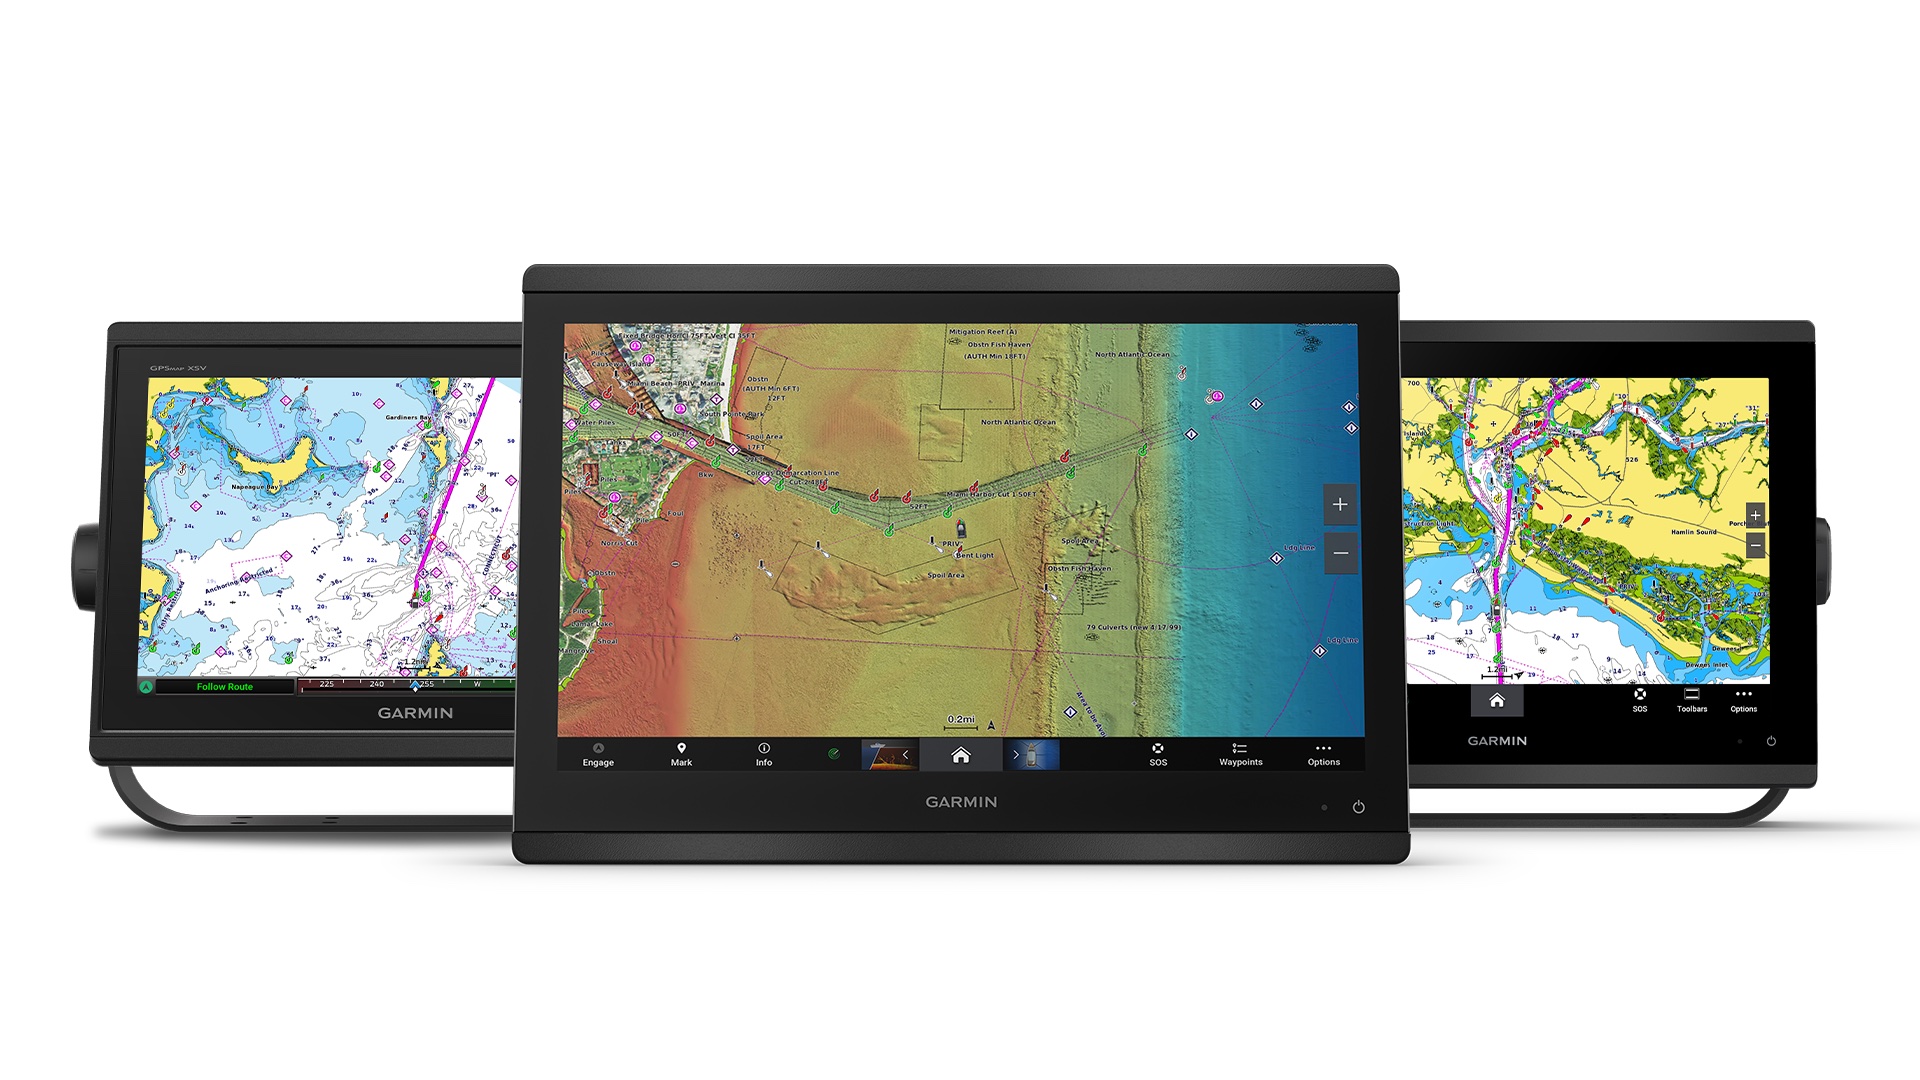 Garmin marine cartography now in GPSMAP chartplotter